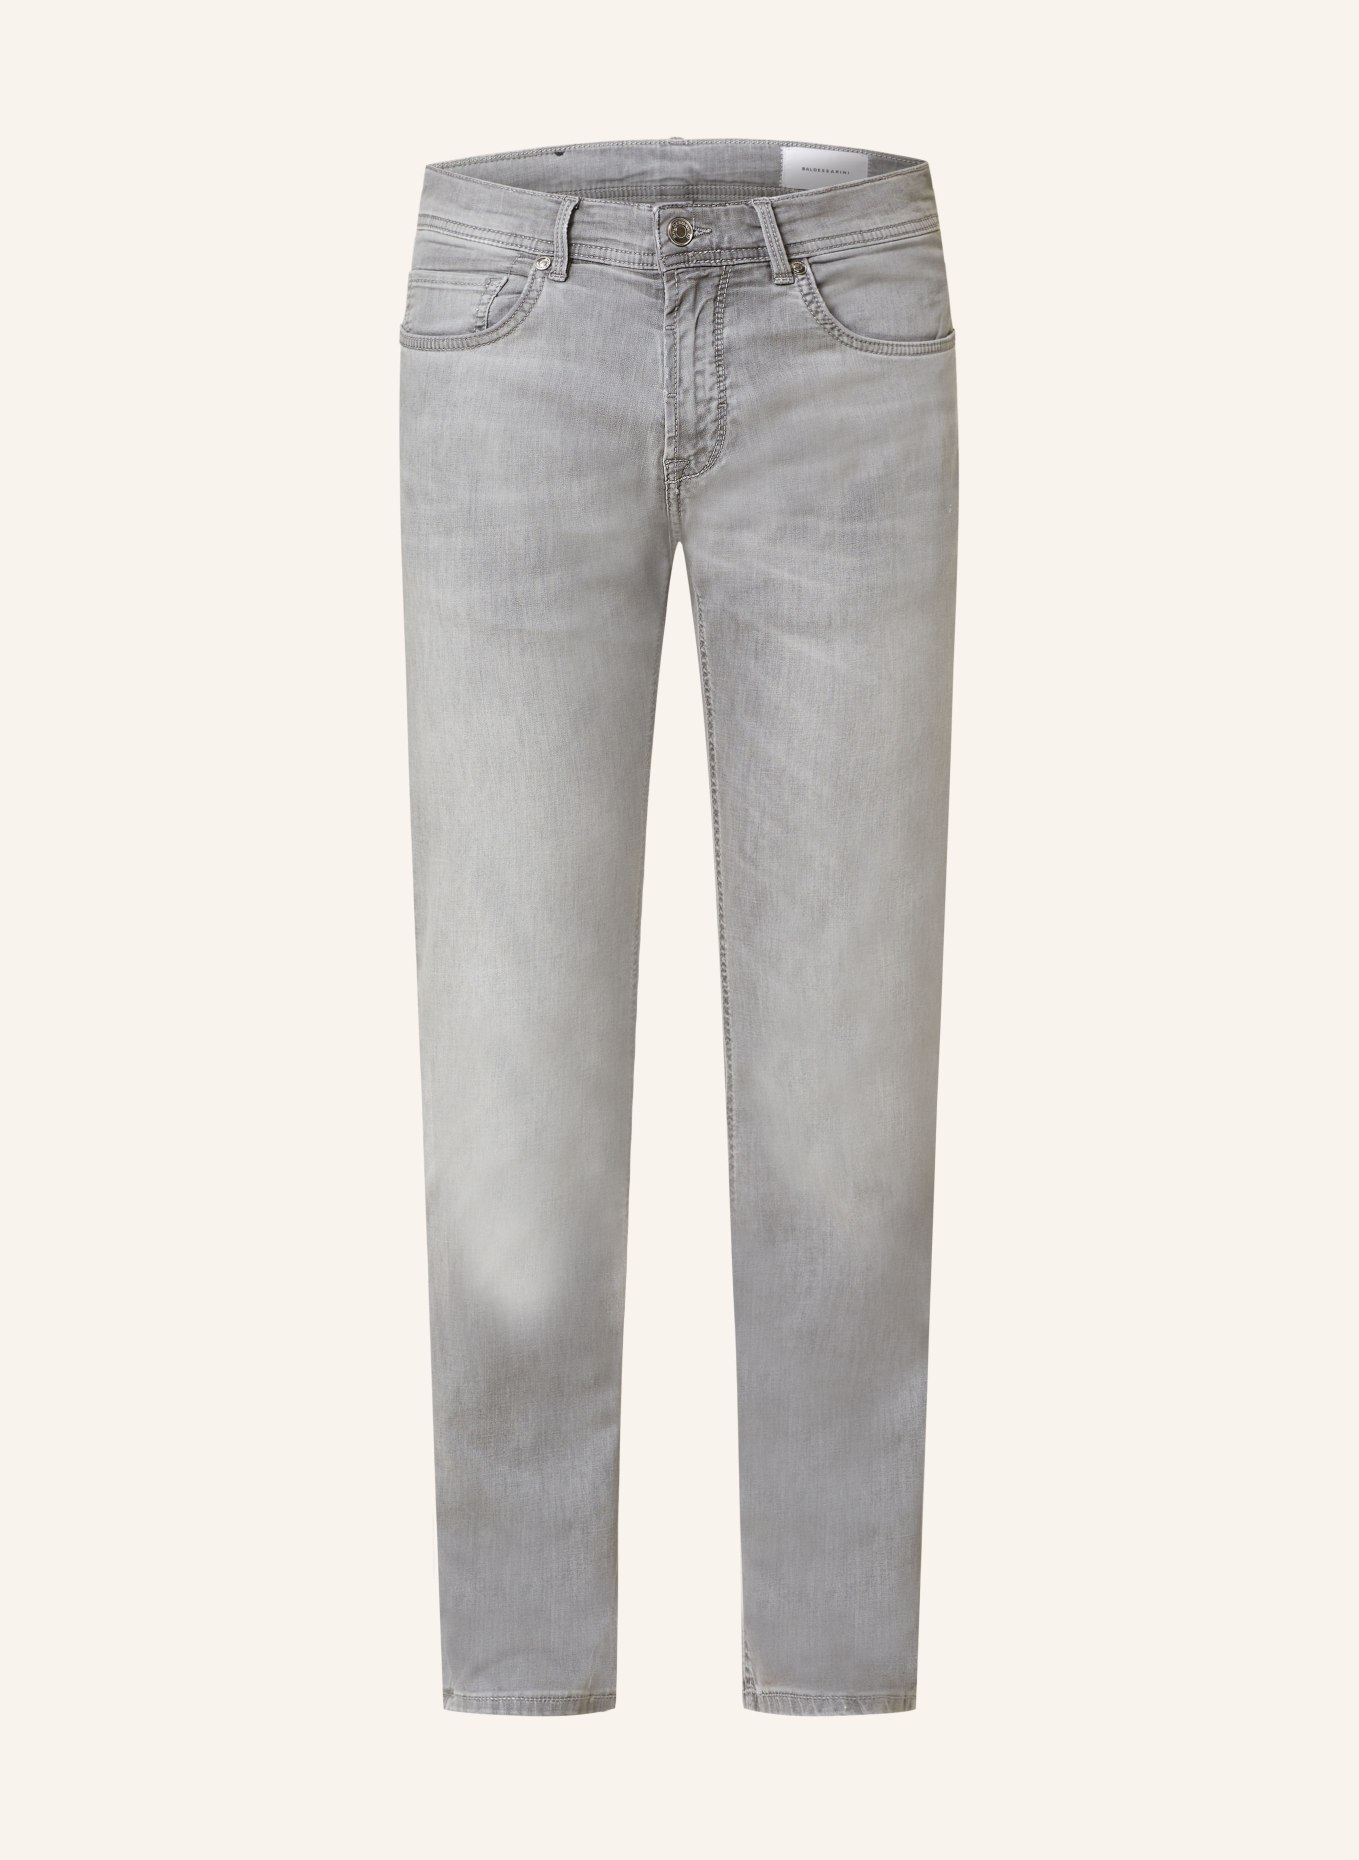 BALDESSARINI Jeans Regular Fit, Farbe: 9854 silver used buffies (Bild 1)